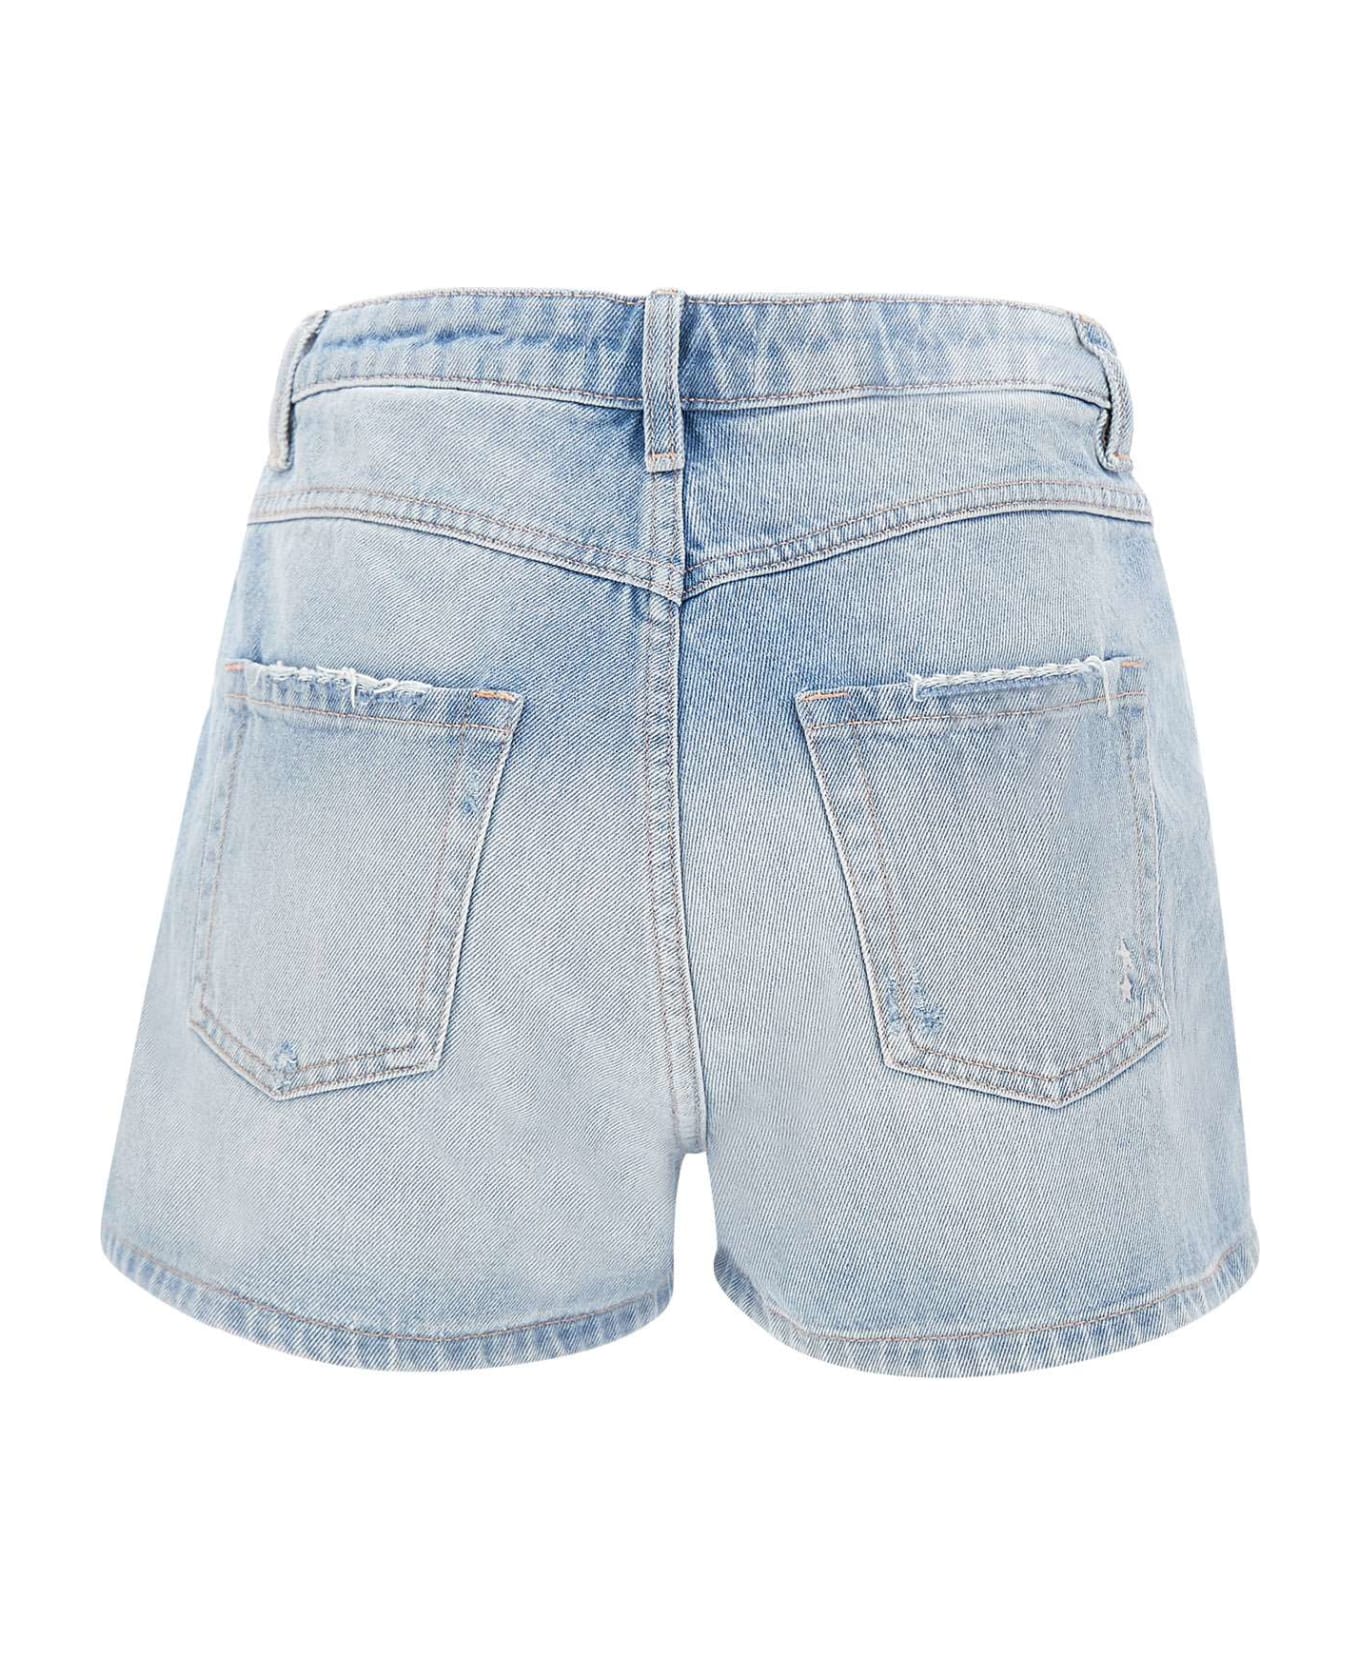 Icon Denim "sam Eco" Shorts - BLUE